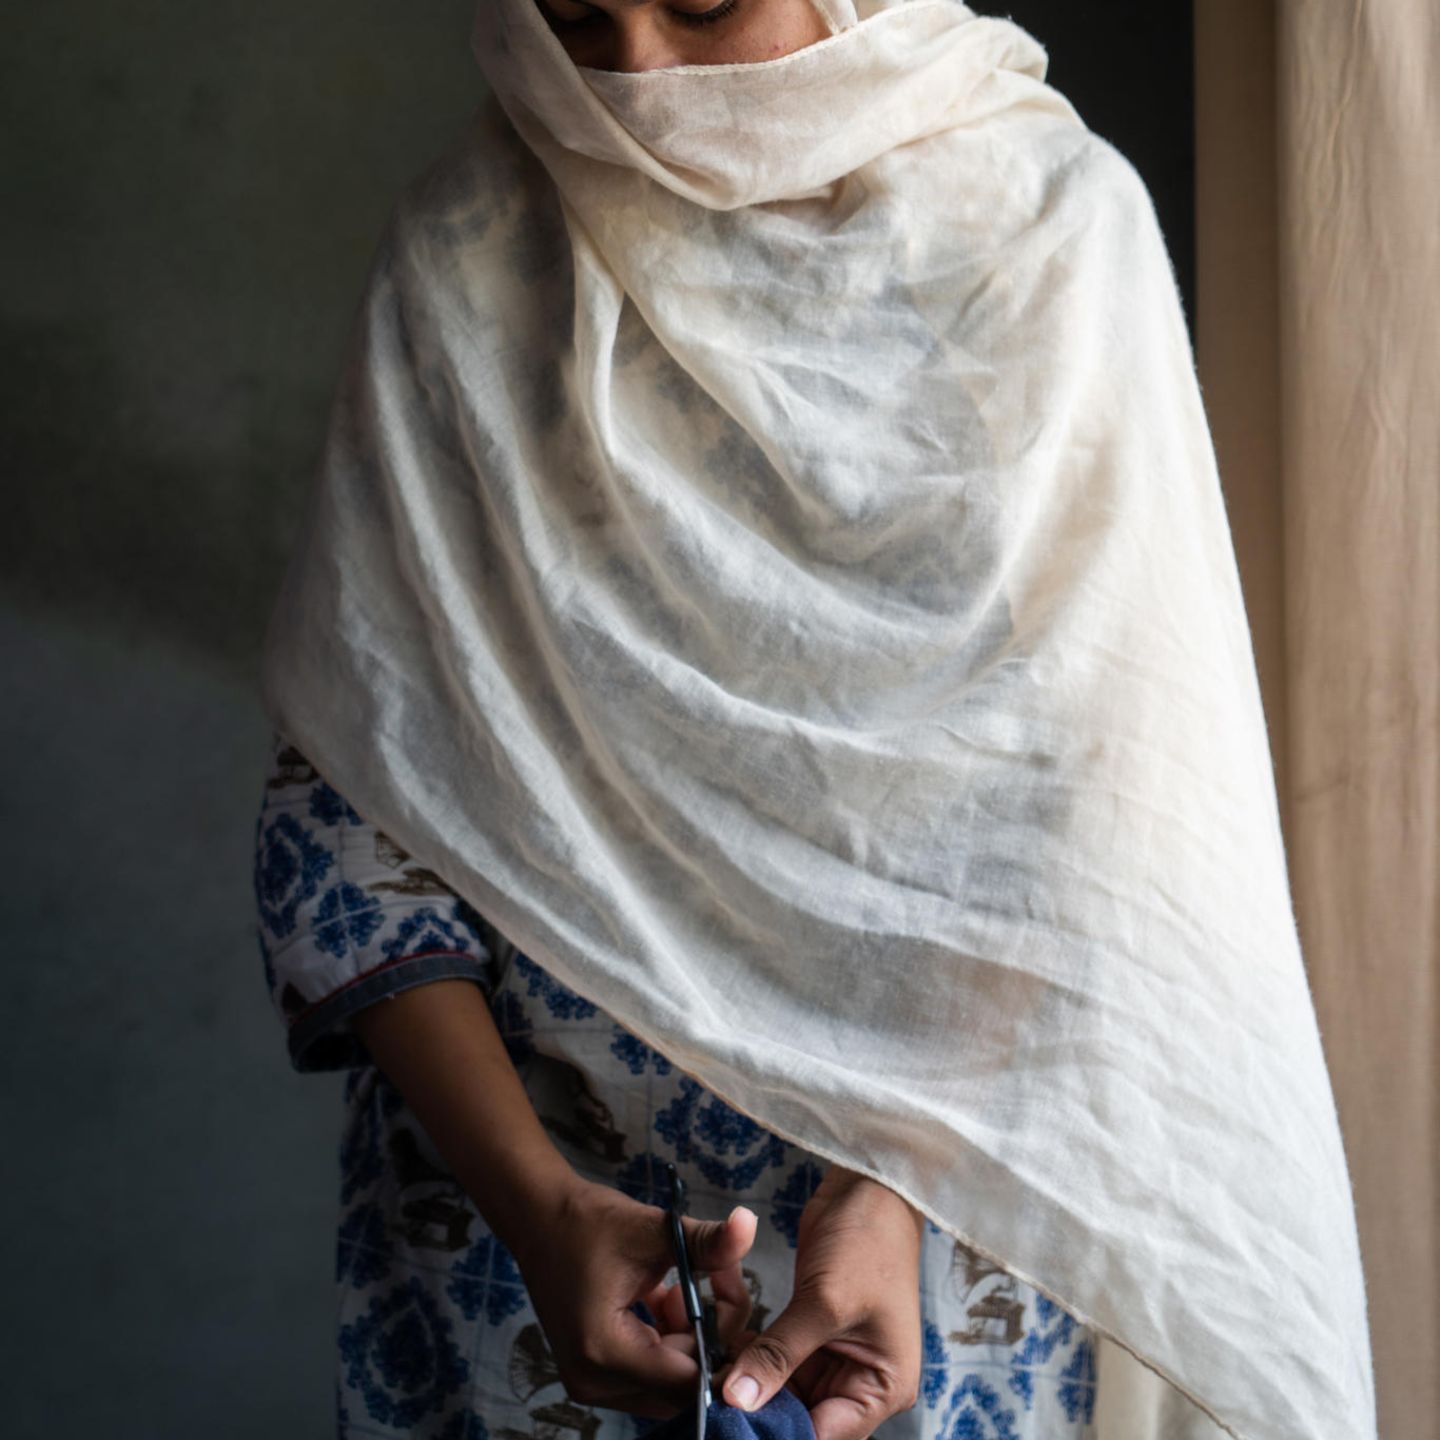 Periode mit Stoff, Saba, 18, Pakistan